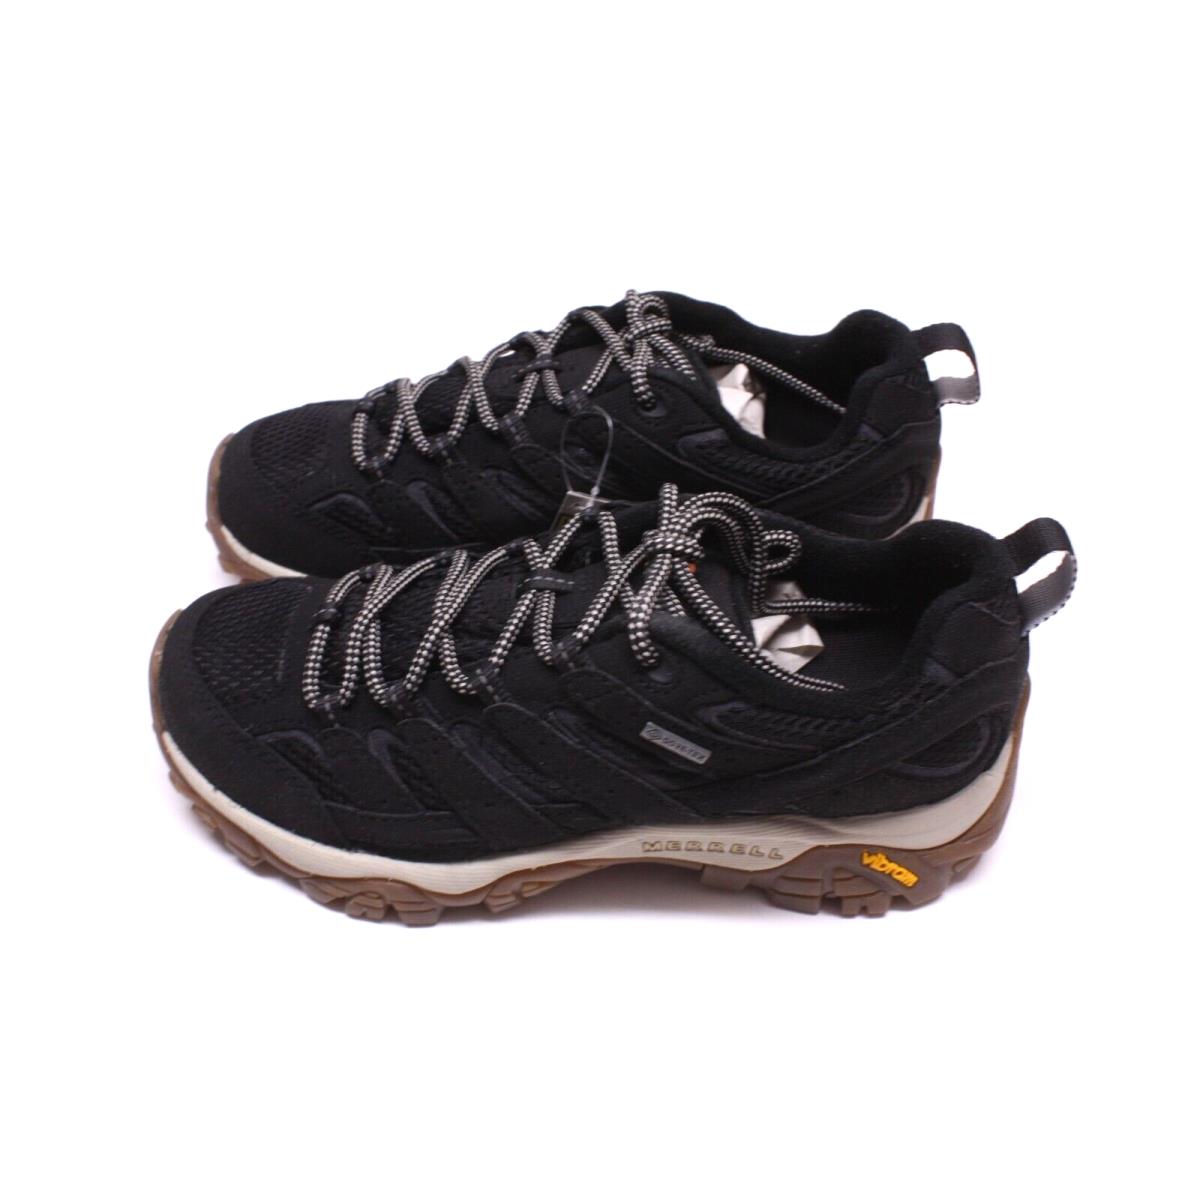 Merrell Moab 2 Gtx Women`s Hiking Shoes Size 7.5 J035512